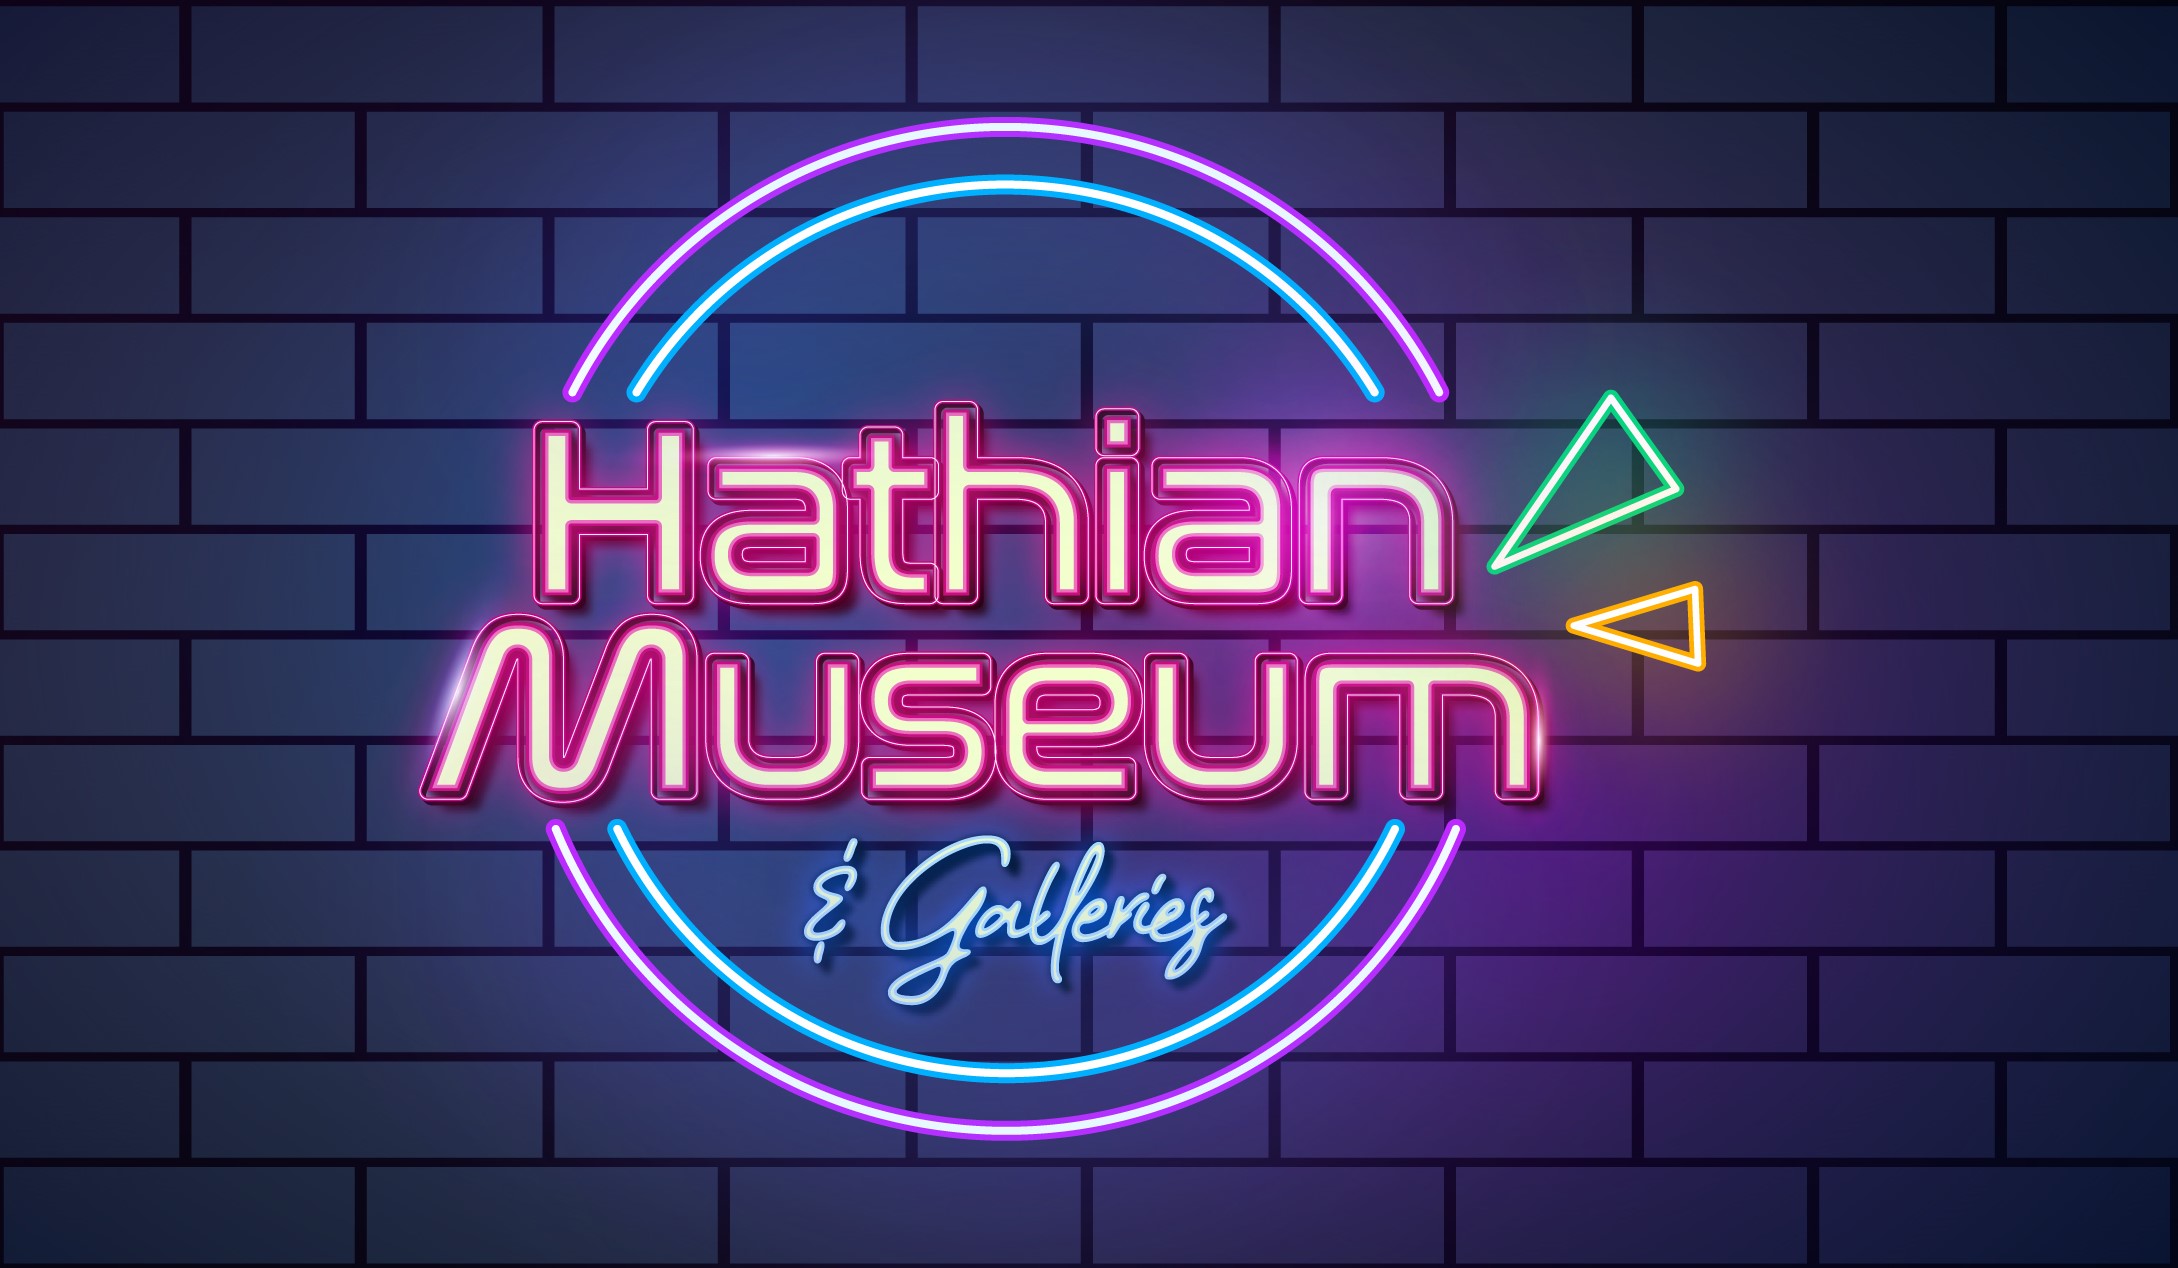 Hathian Museum & Galleries